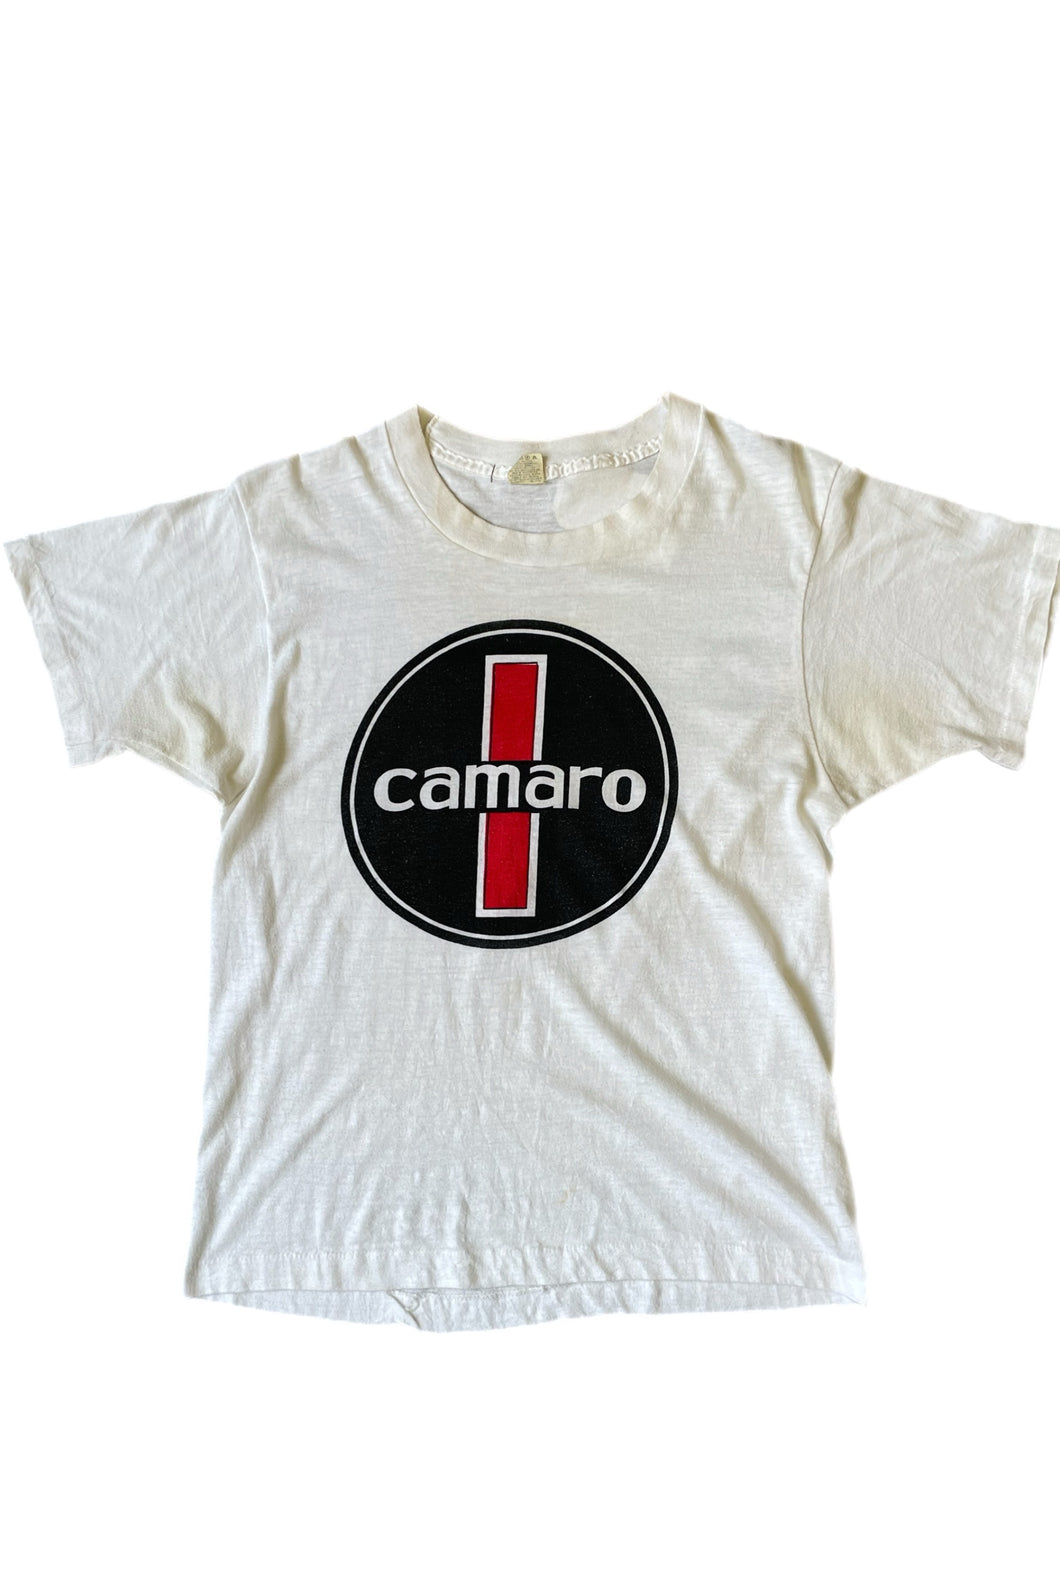 Vintage 1980's Camaro soft and thin T-Shirt